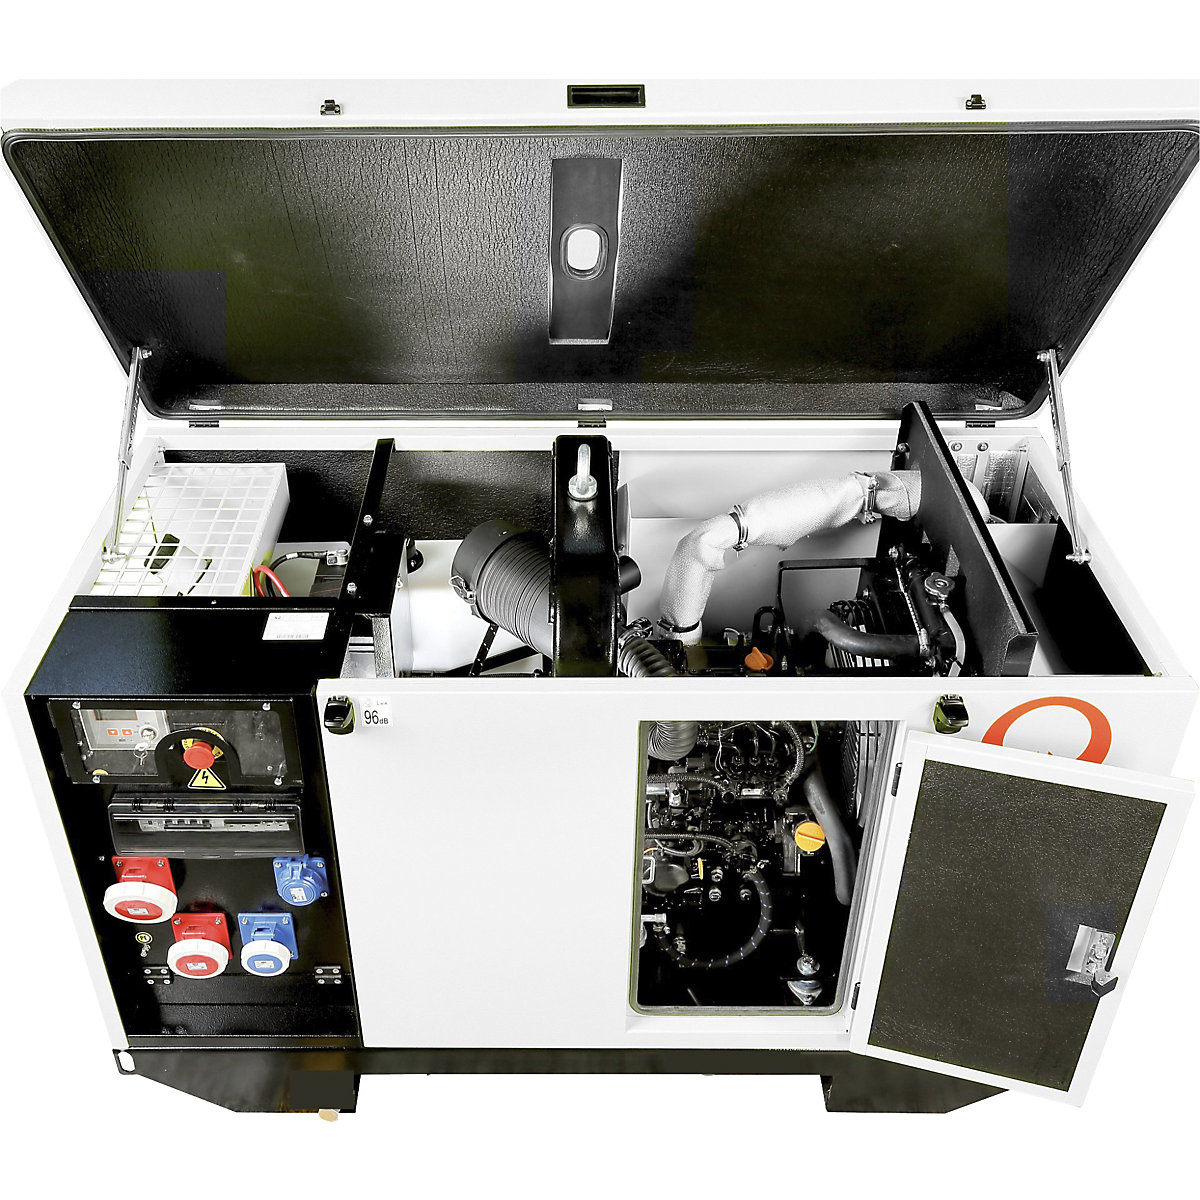 Generator struje serije P, dizel, 400/230 V – Pramac (Prikaz proizvoda 2)-1